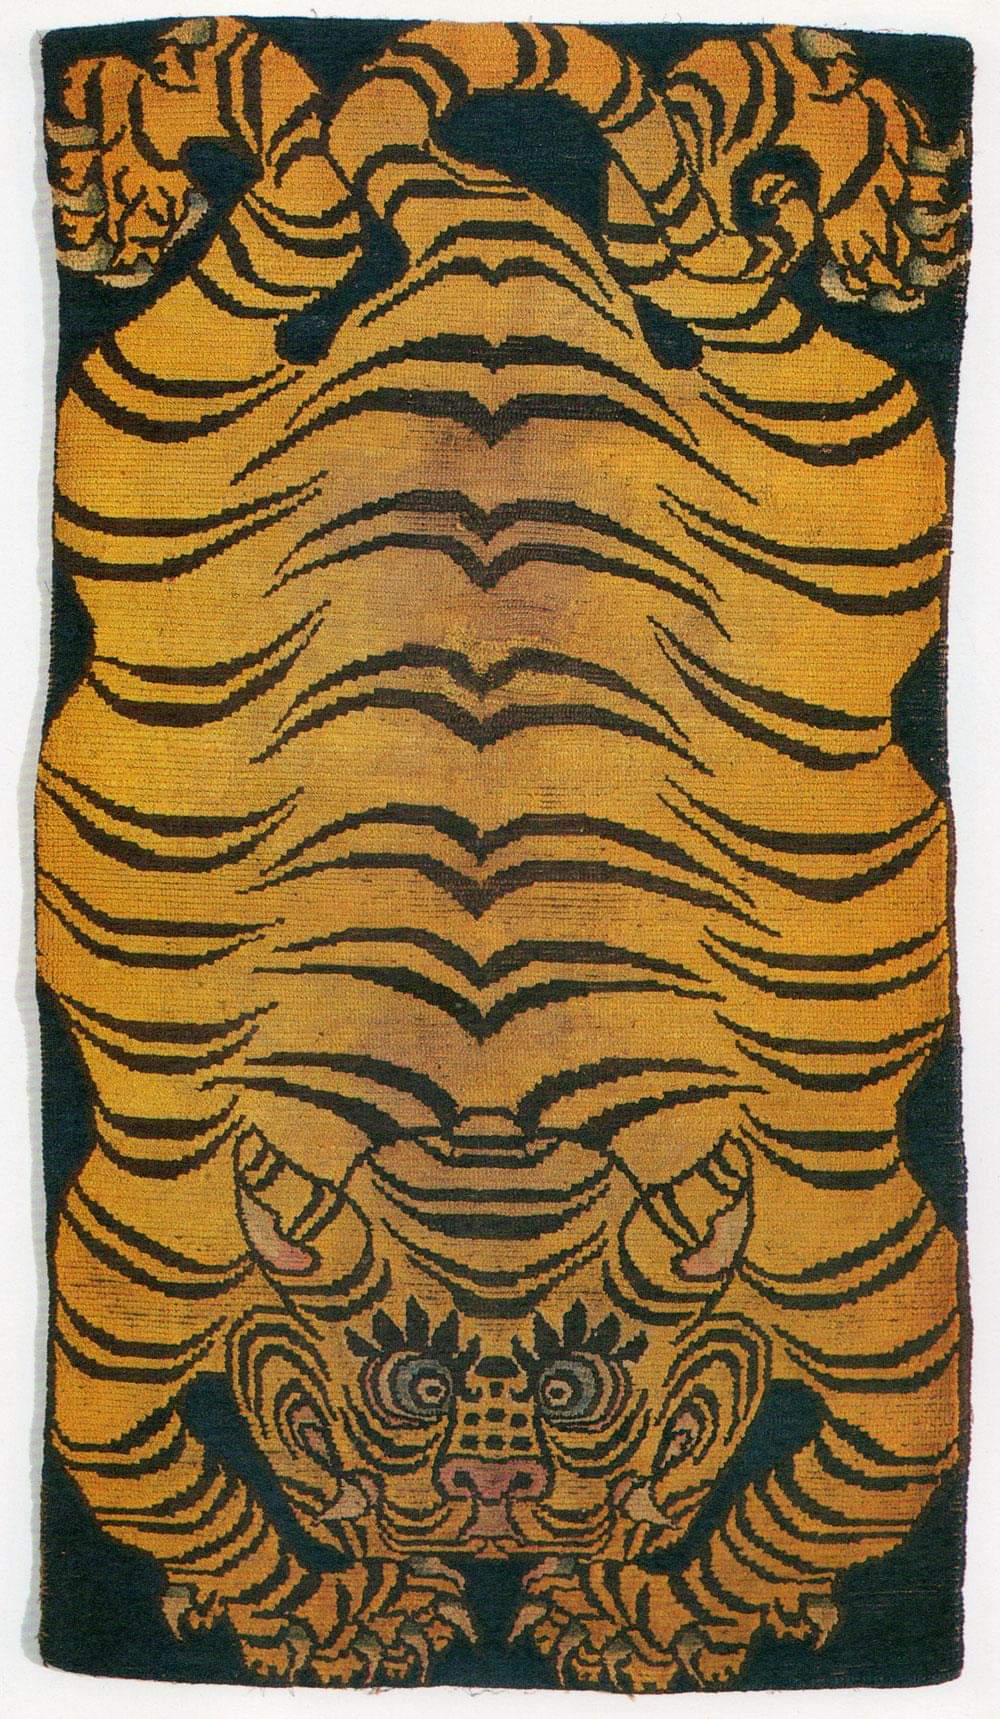 A Tibetan tiger rug